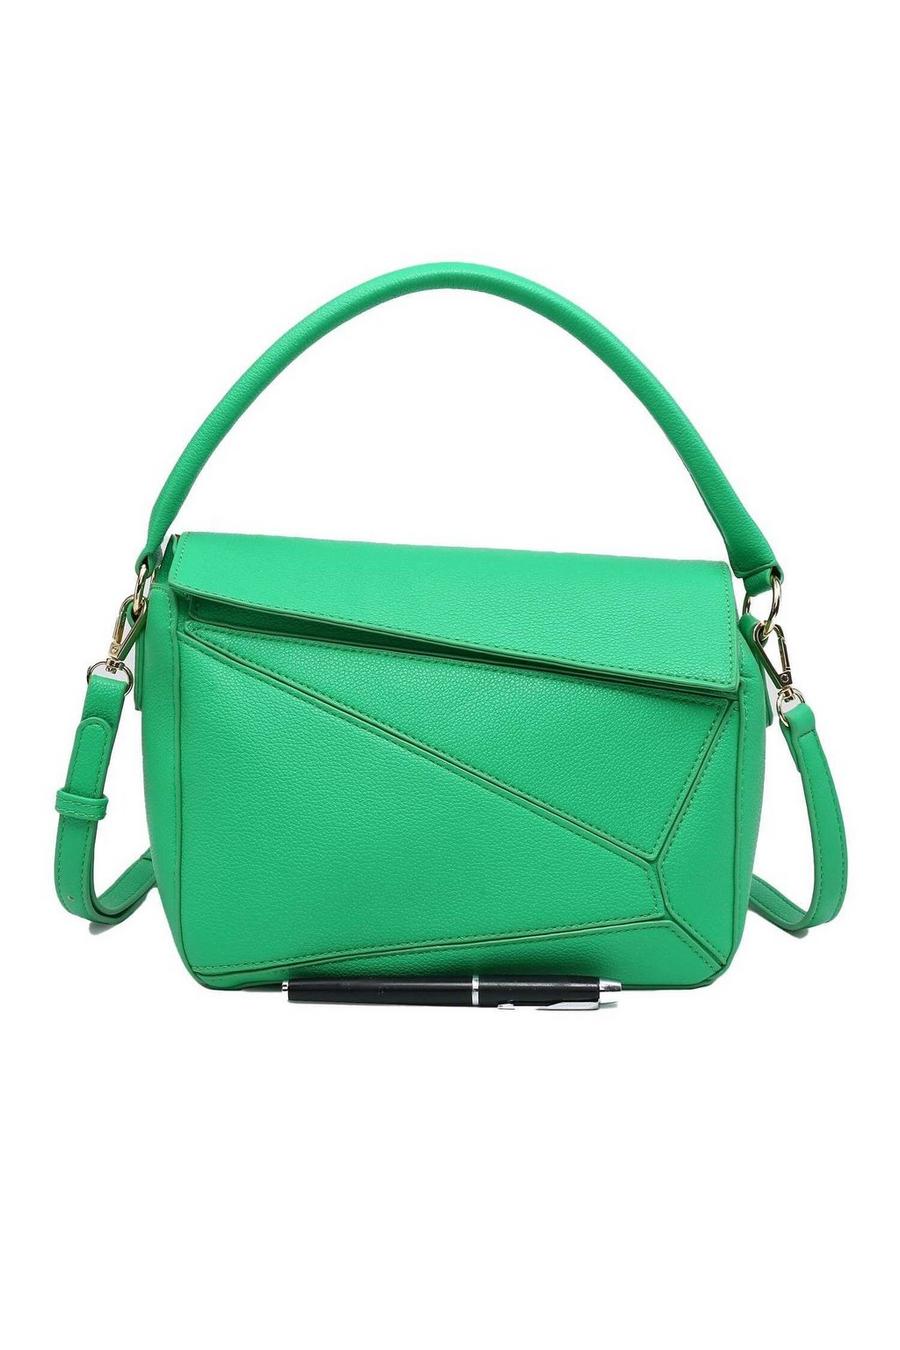 Green Geometric Style Roomy Small Shoulder Handbag Crossbody Bag